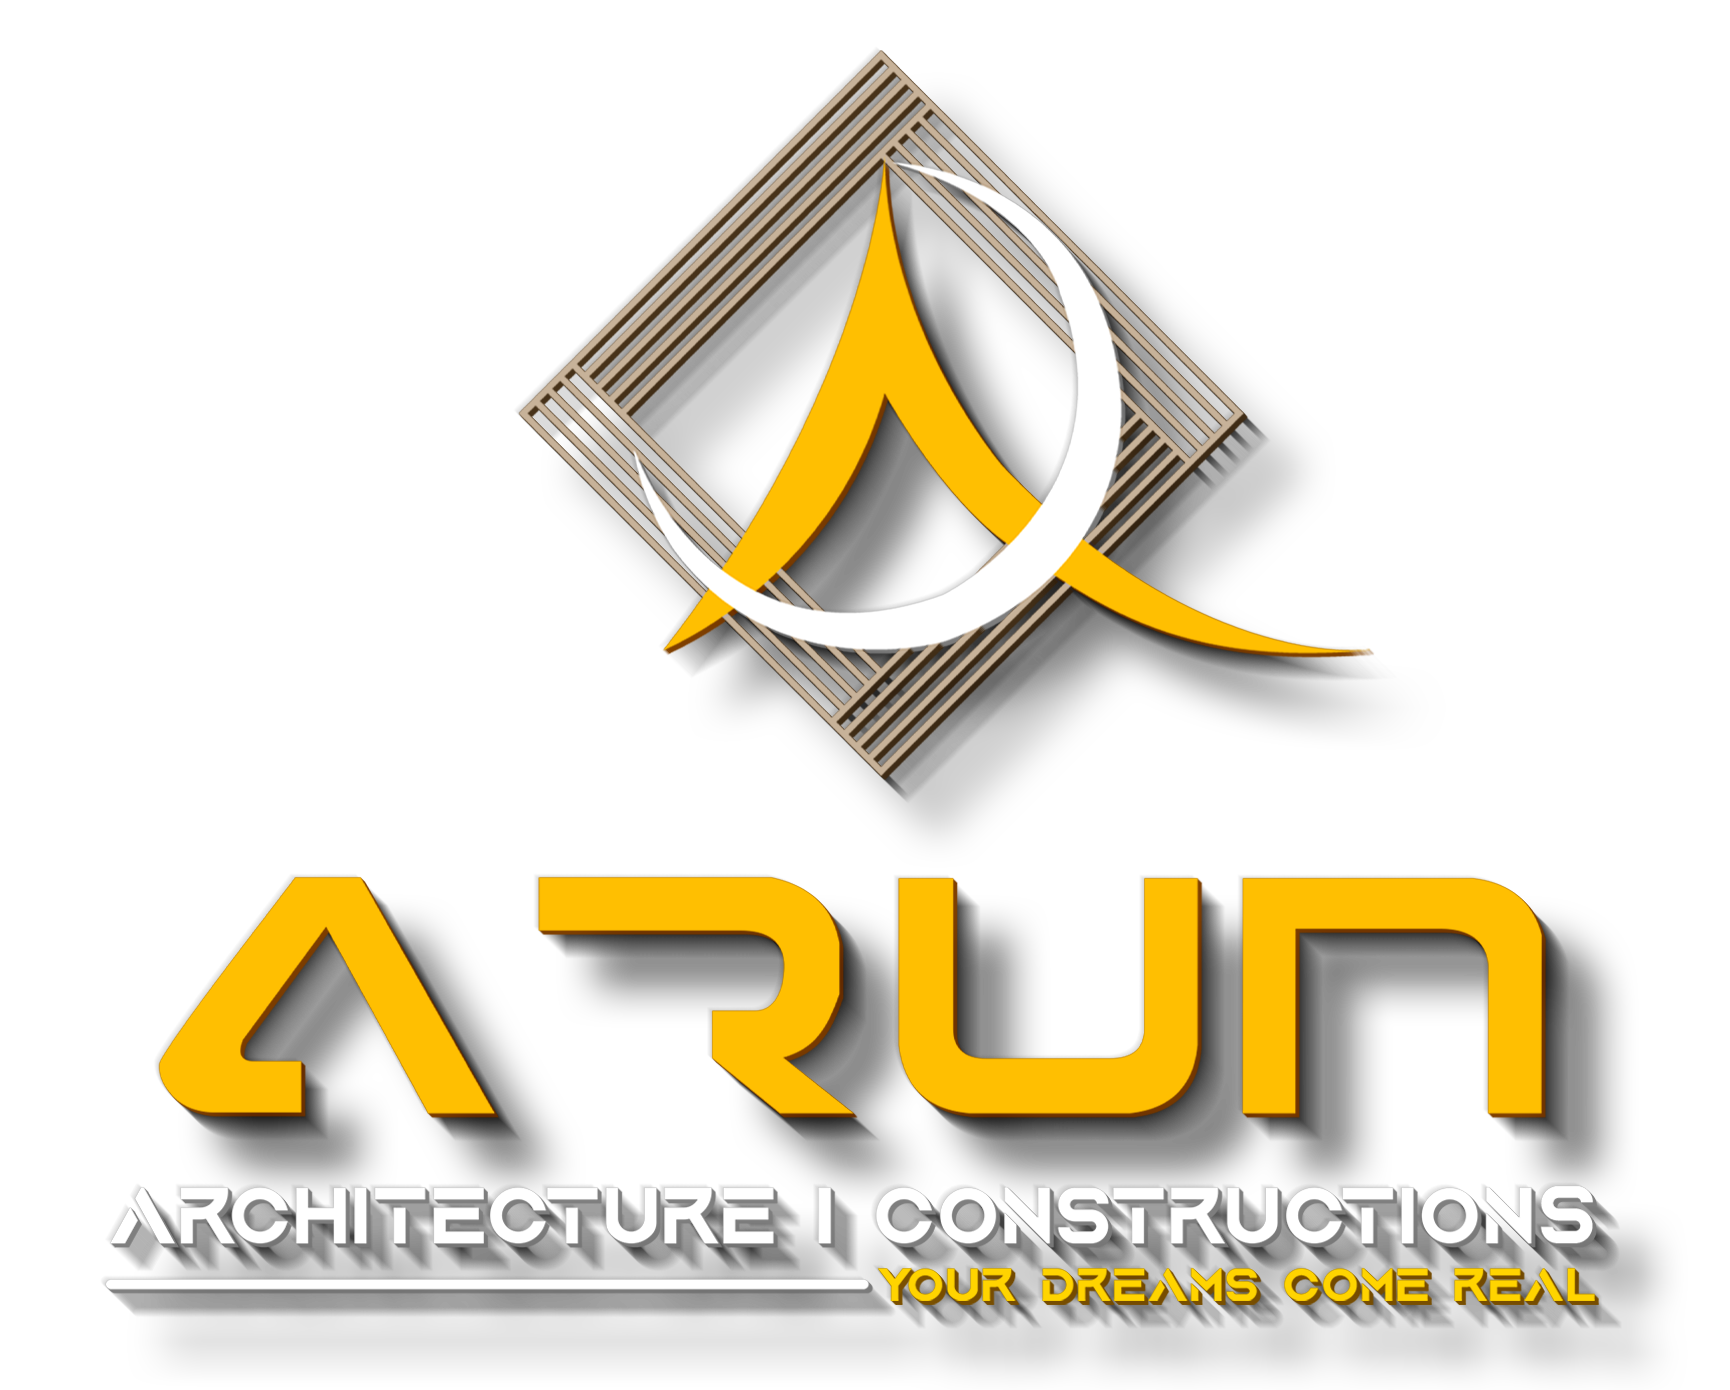 ARUN KUNDU - Web Developper & Electrical Engineer.